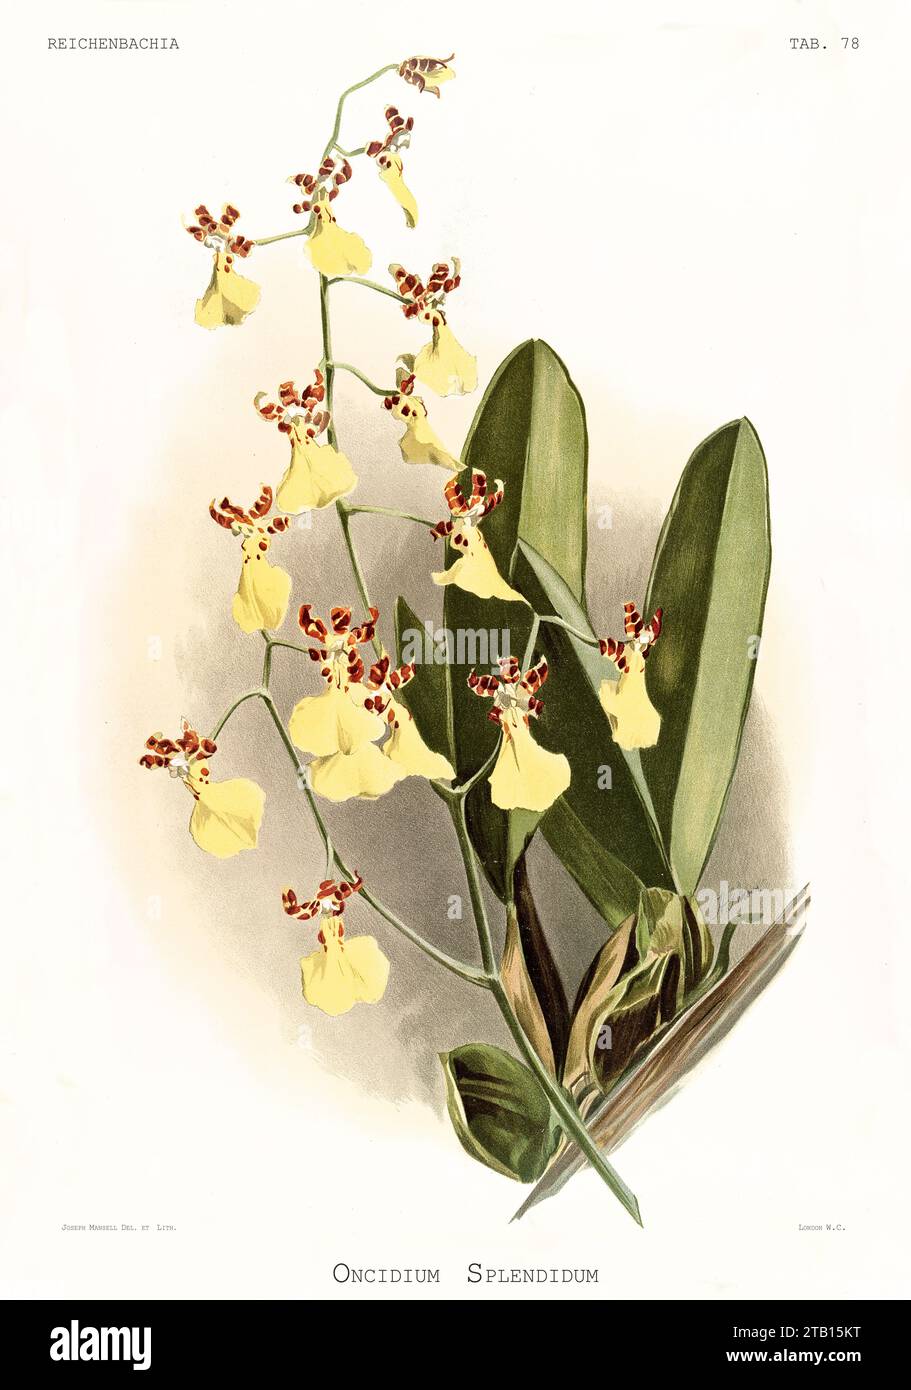 Old illustration of  Splendid Oncidium (Oncidium splendidum). Reichenbachia, by F. Sander. St. Albans, UK, 1888 - 1894 Stock Photo